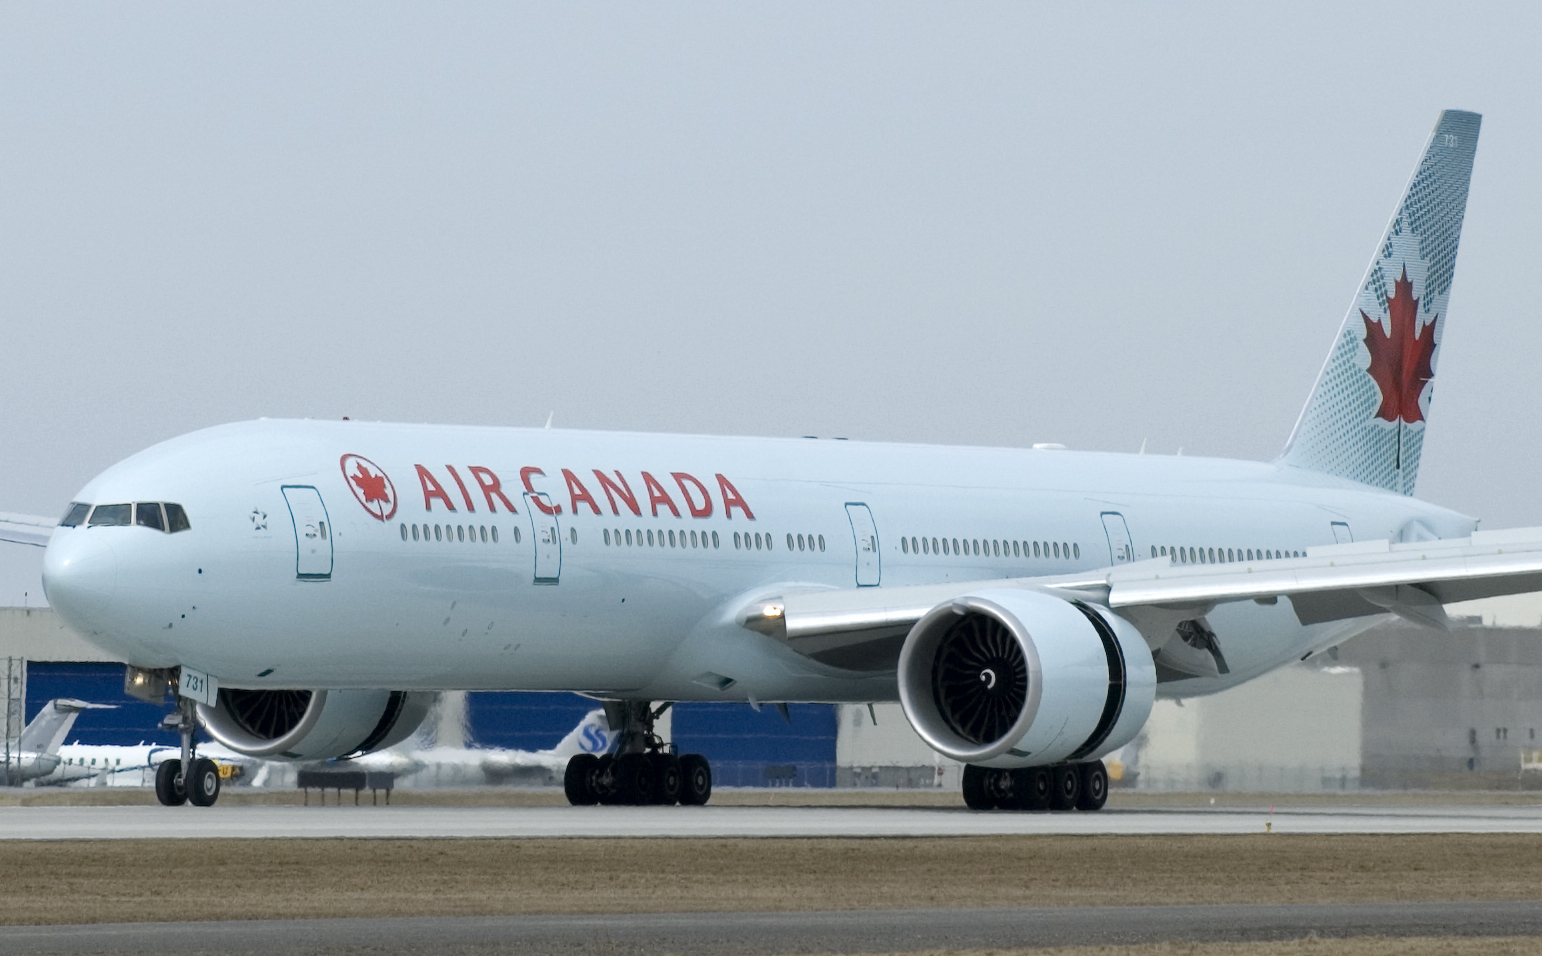 Air Canada Baggage Handler Throws Bags 20ft [VIDEO]